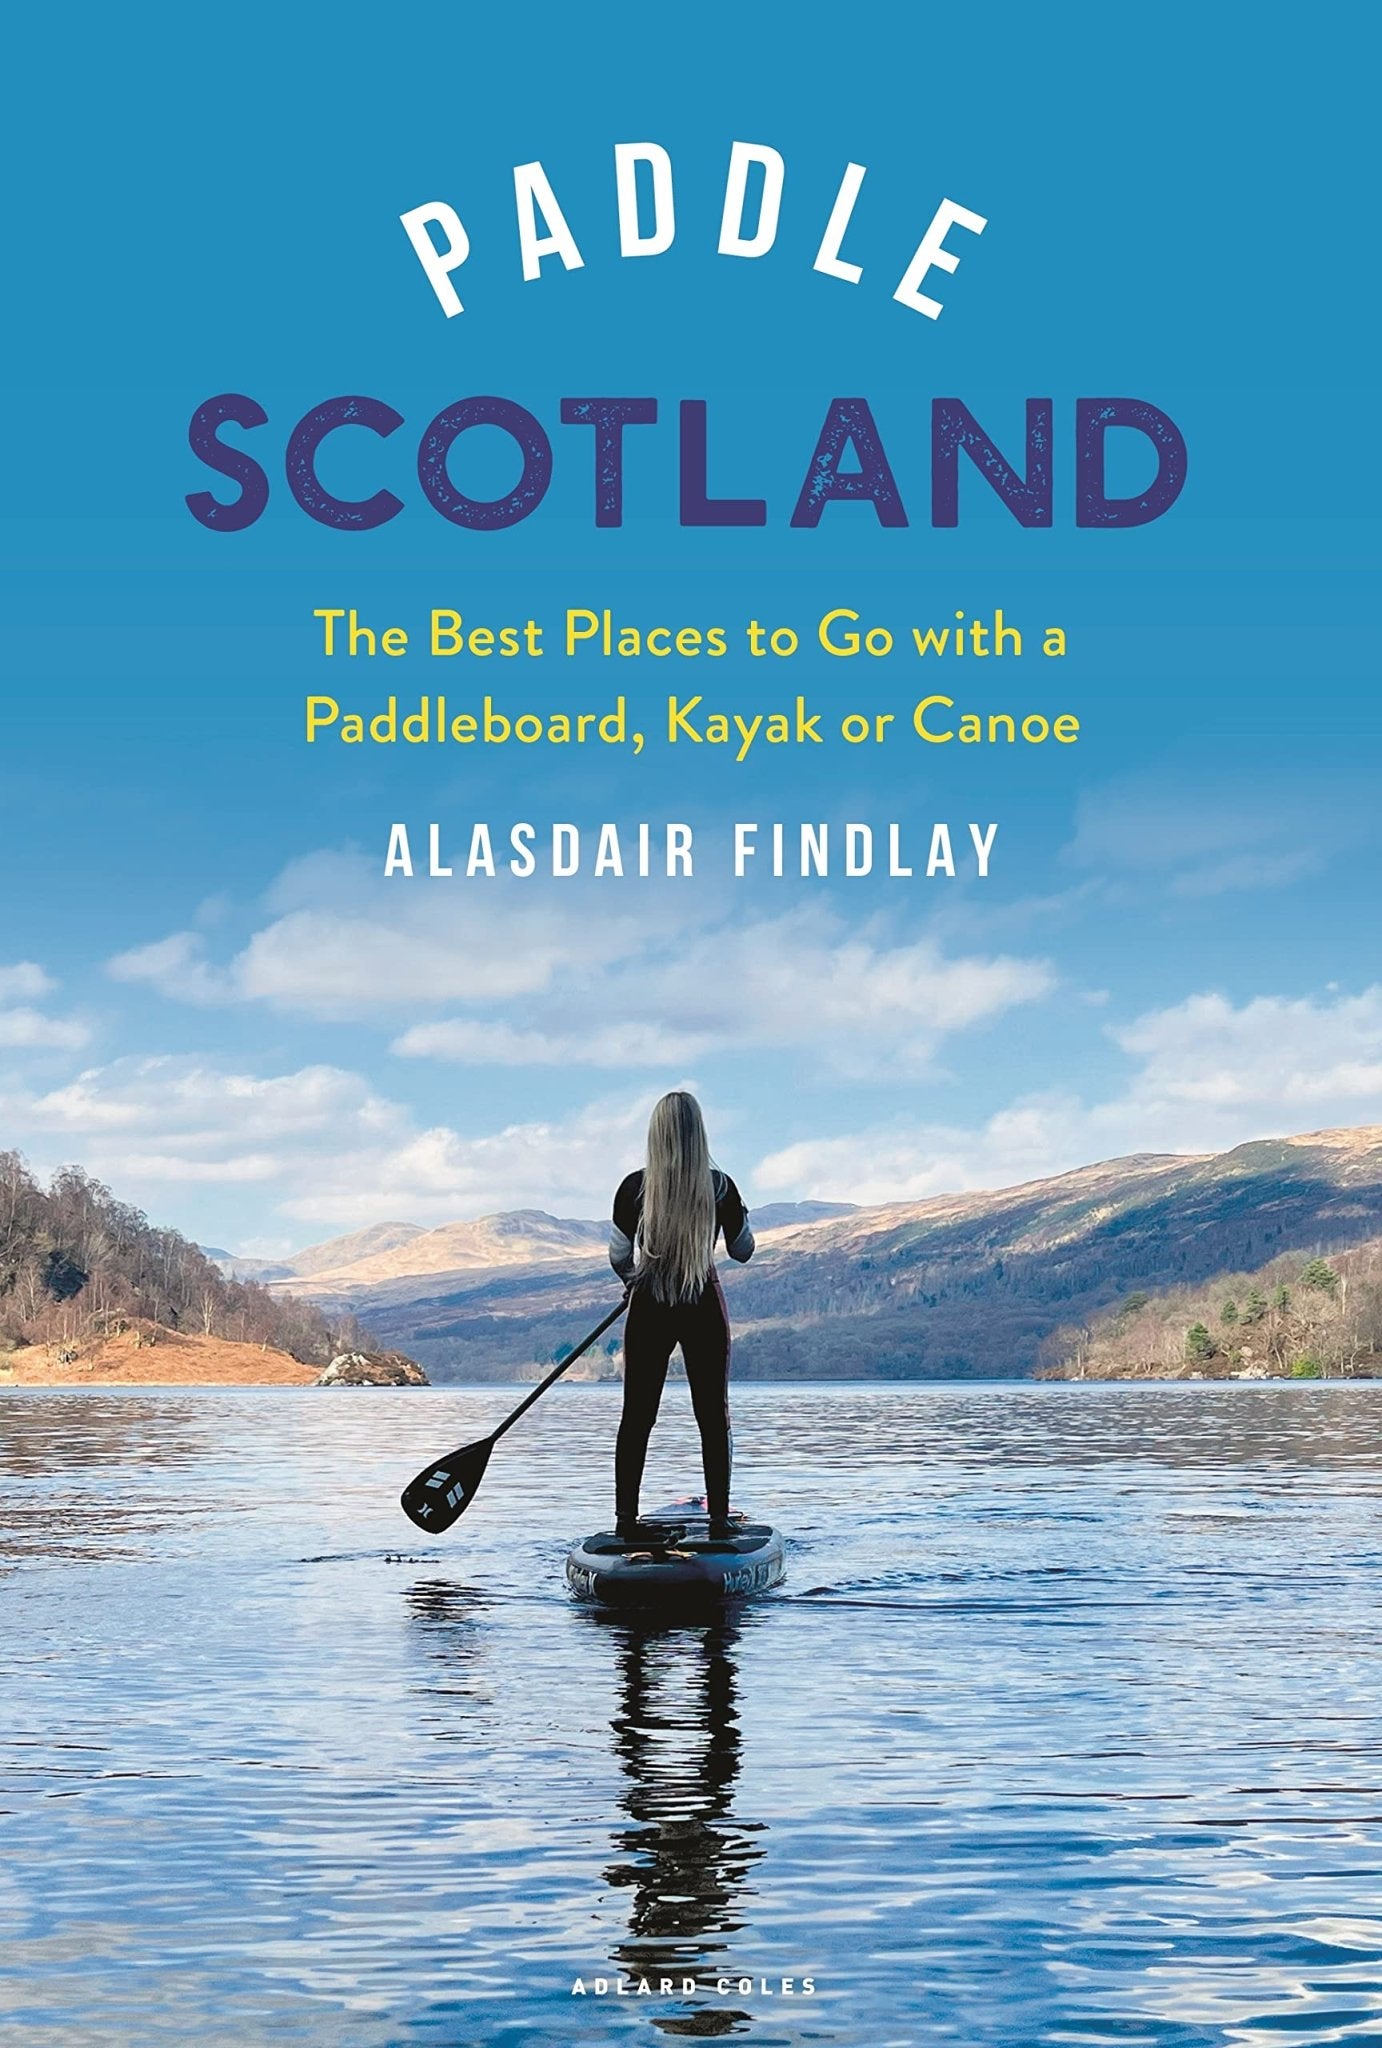 PADDLE SCOTLAND, ALASDAIR FINDLAY - Made Scotland